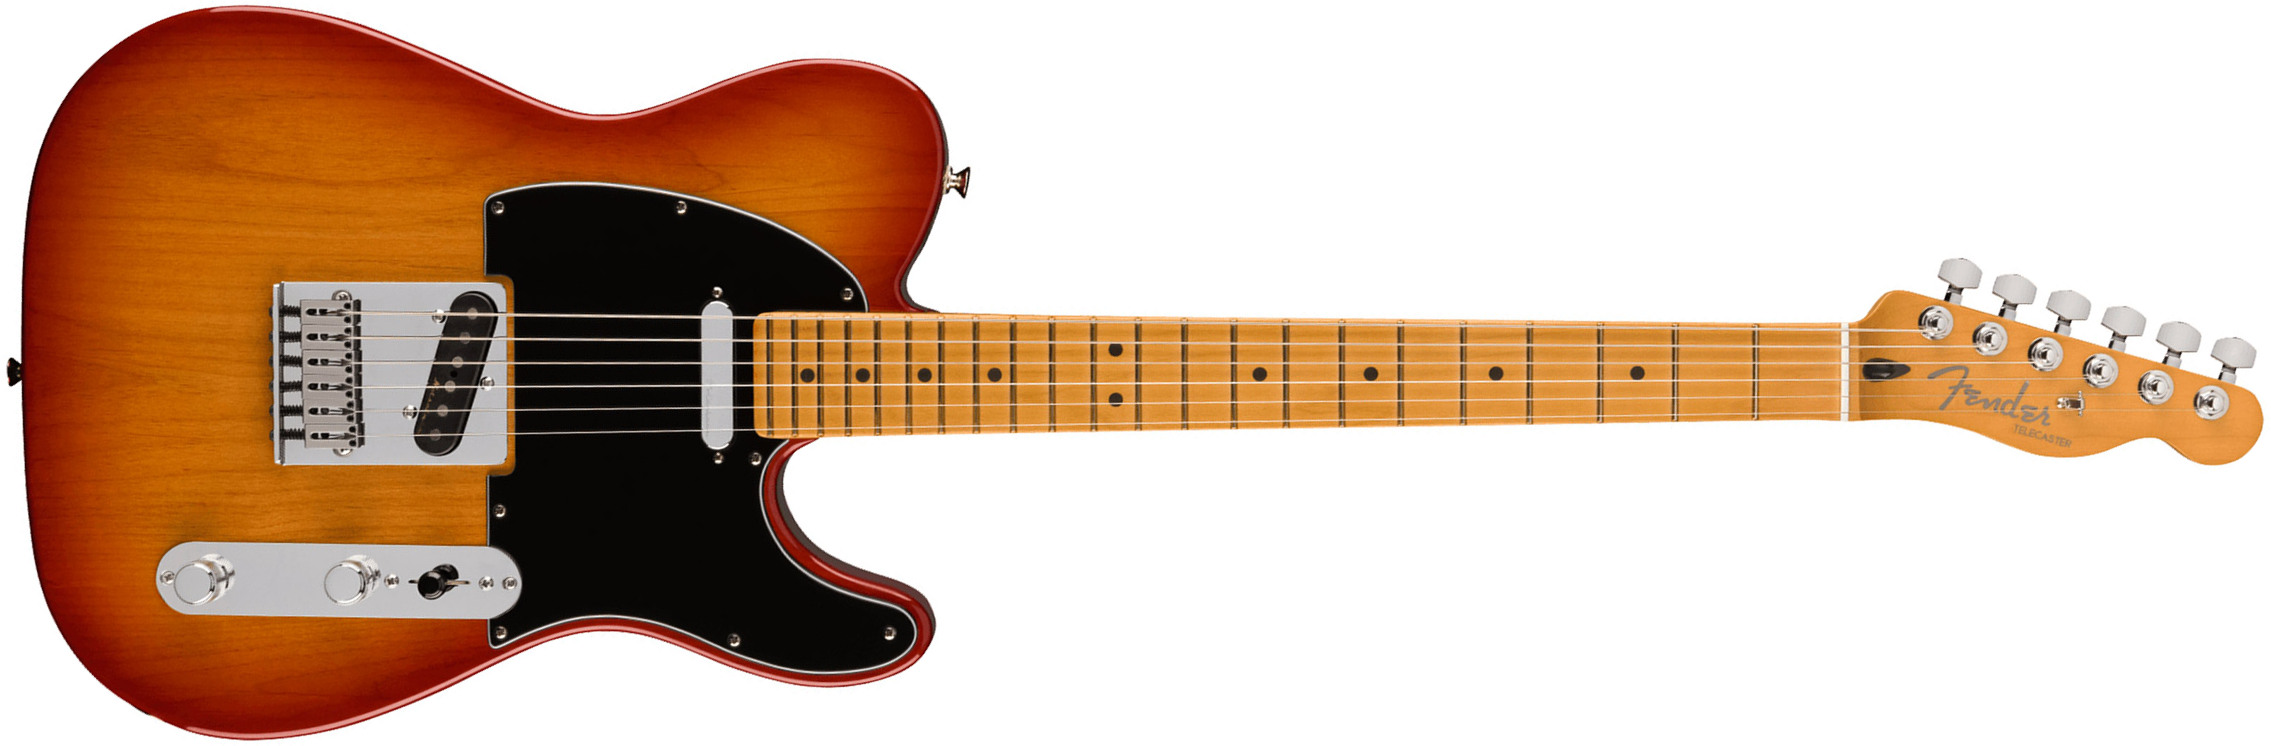 Fender Tele Player Plus Mex 2023 2s Ht Mn - Sienna Sunburst - Tel shape electric guitar - Main picture